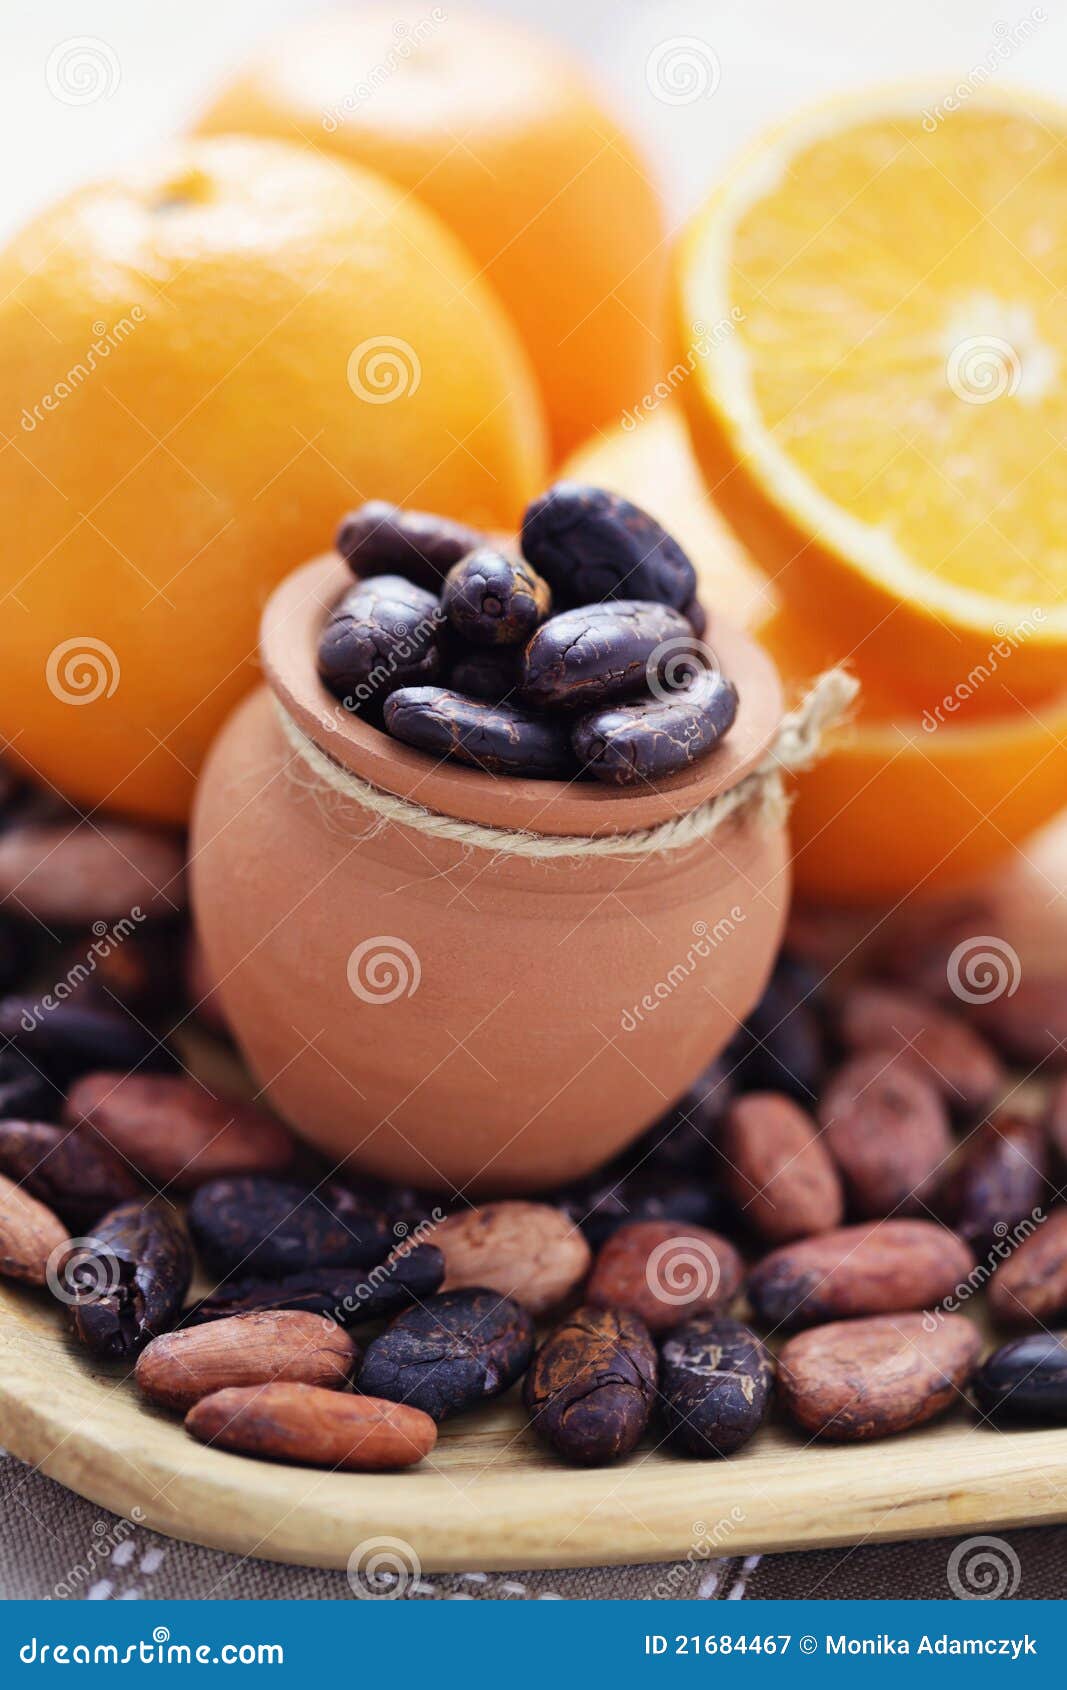 Cocoa and orange stock image. Image of fresh, bean, peel - 21684467